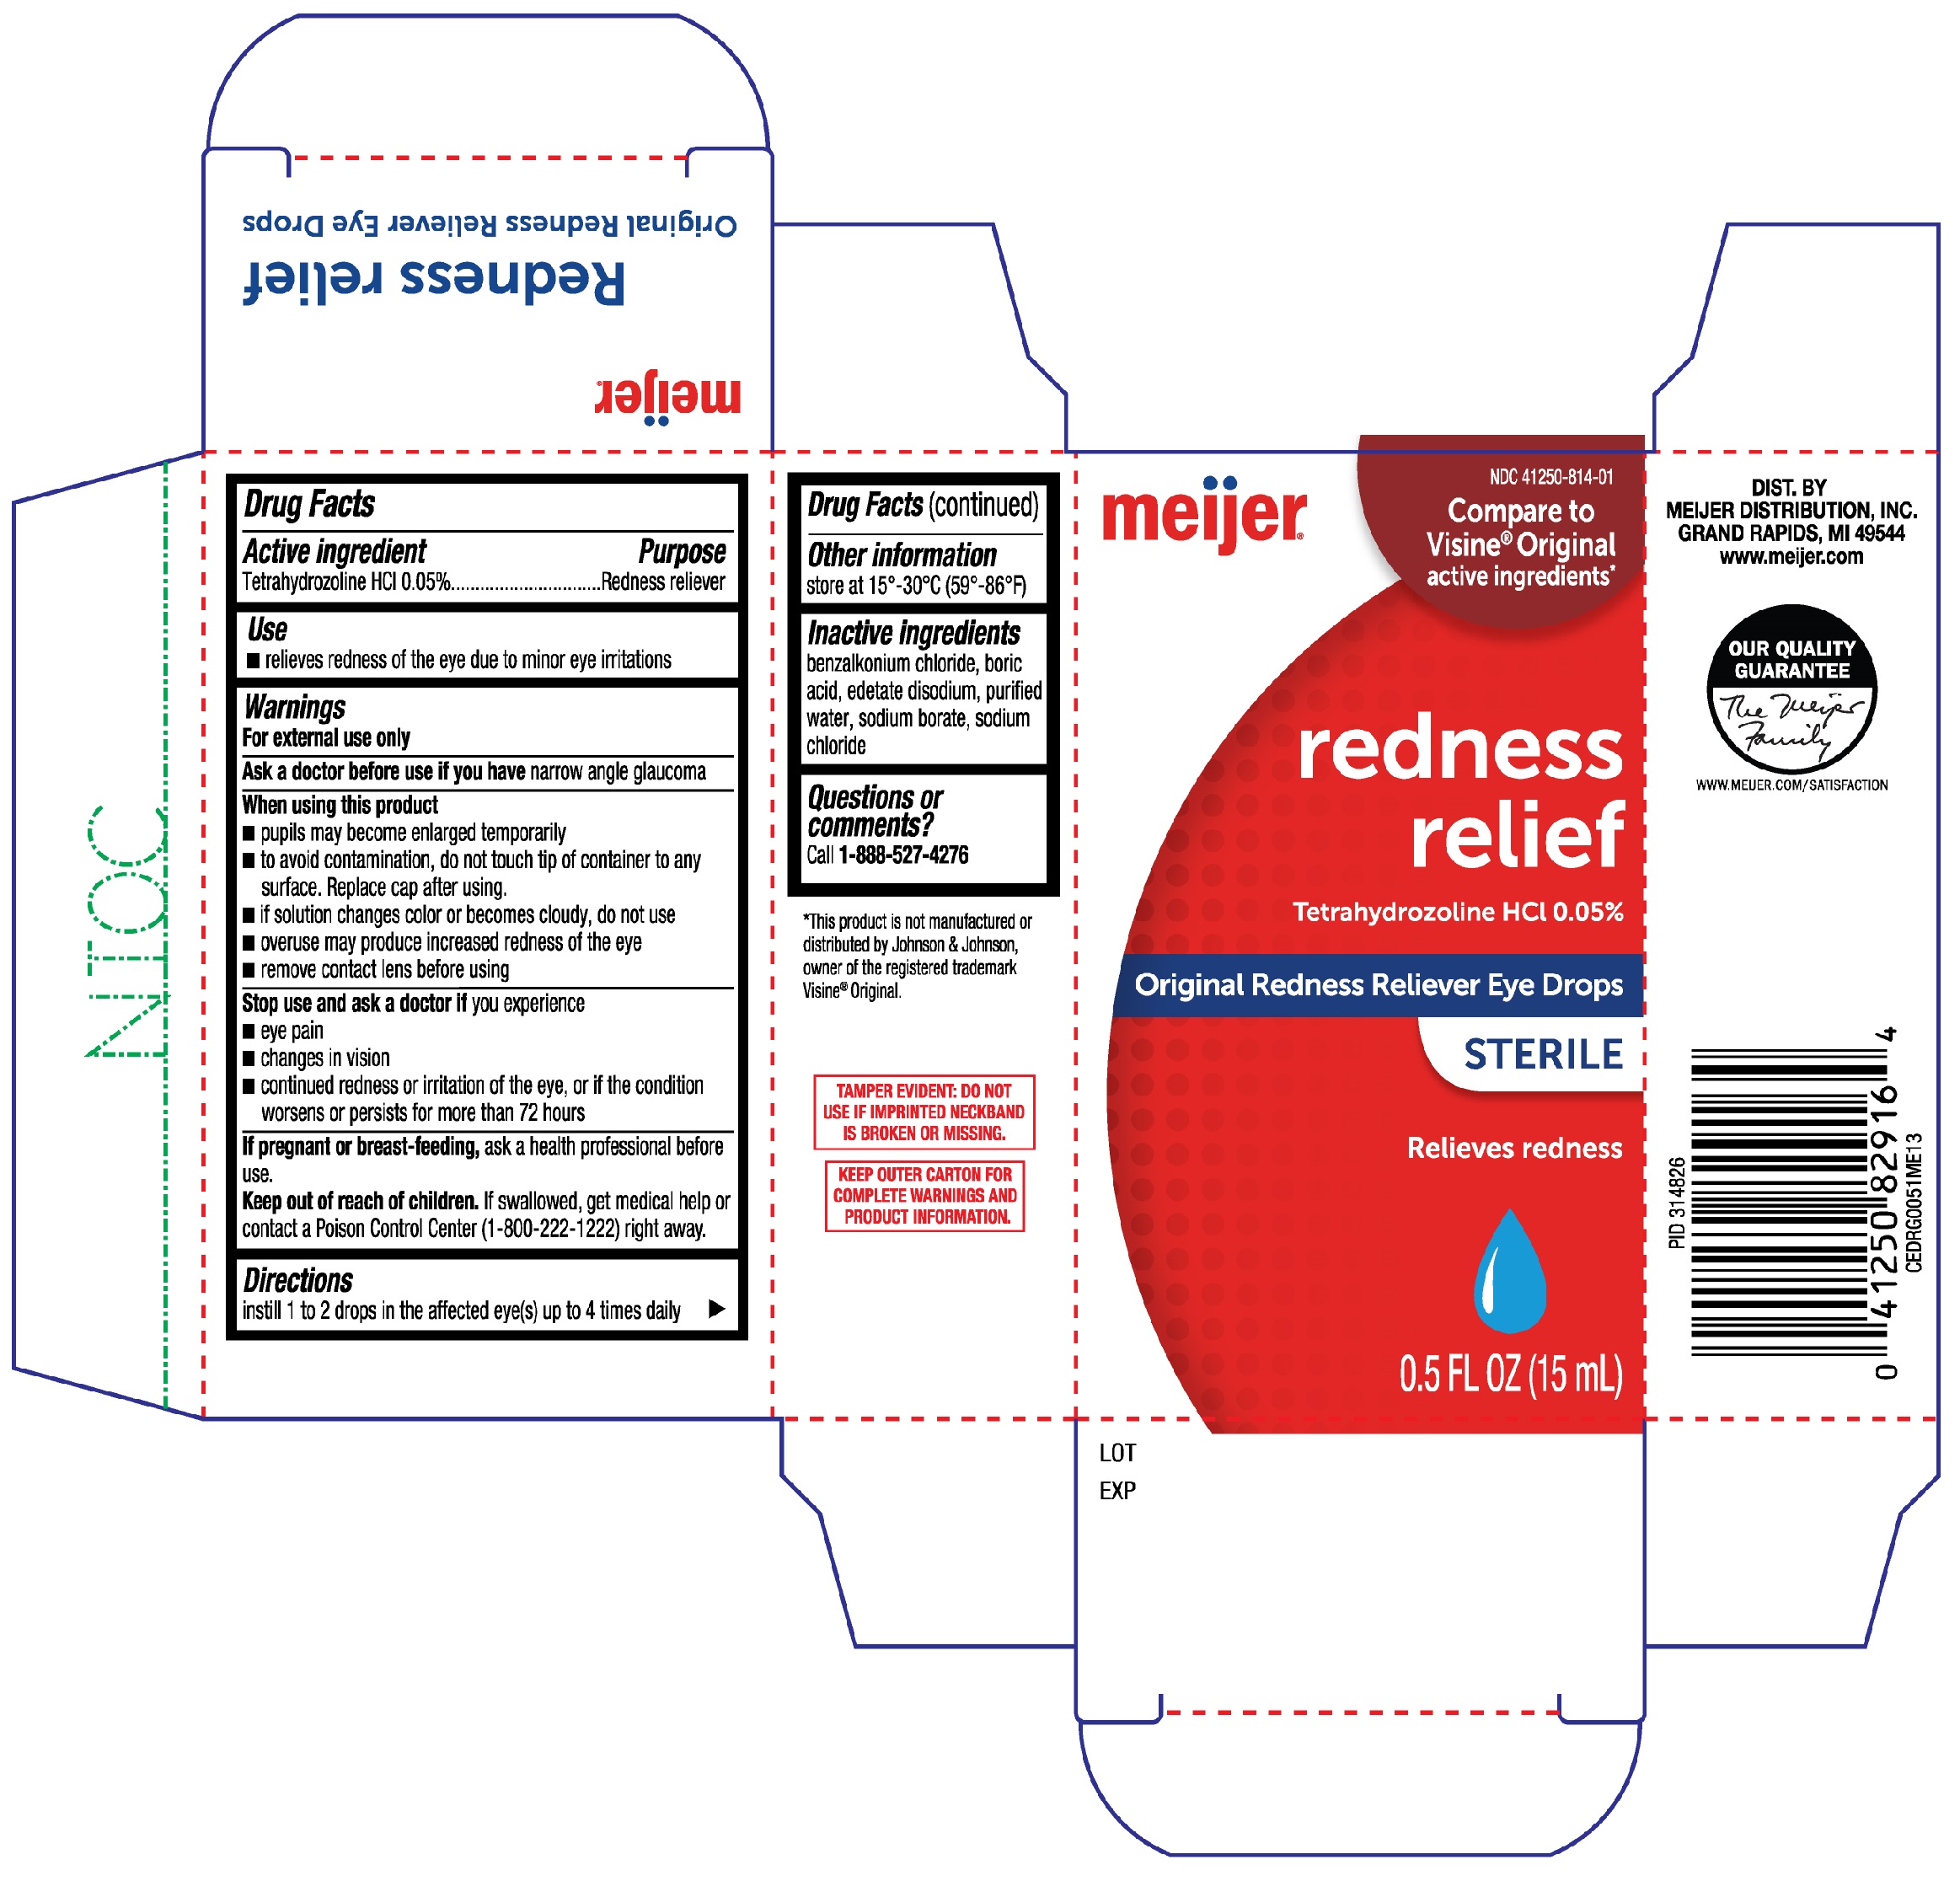 Meijer Redness Relief 15mL (Tetrahydrozoline HCI 0.05%)